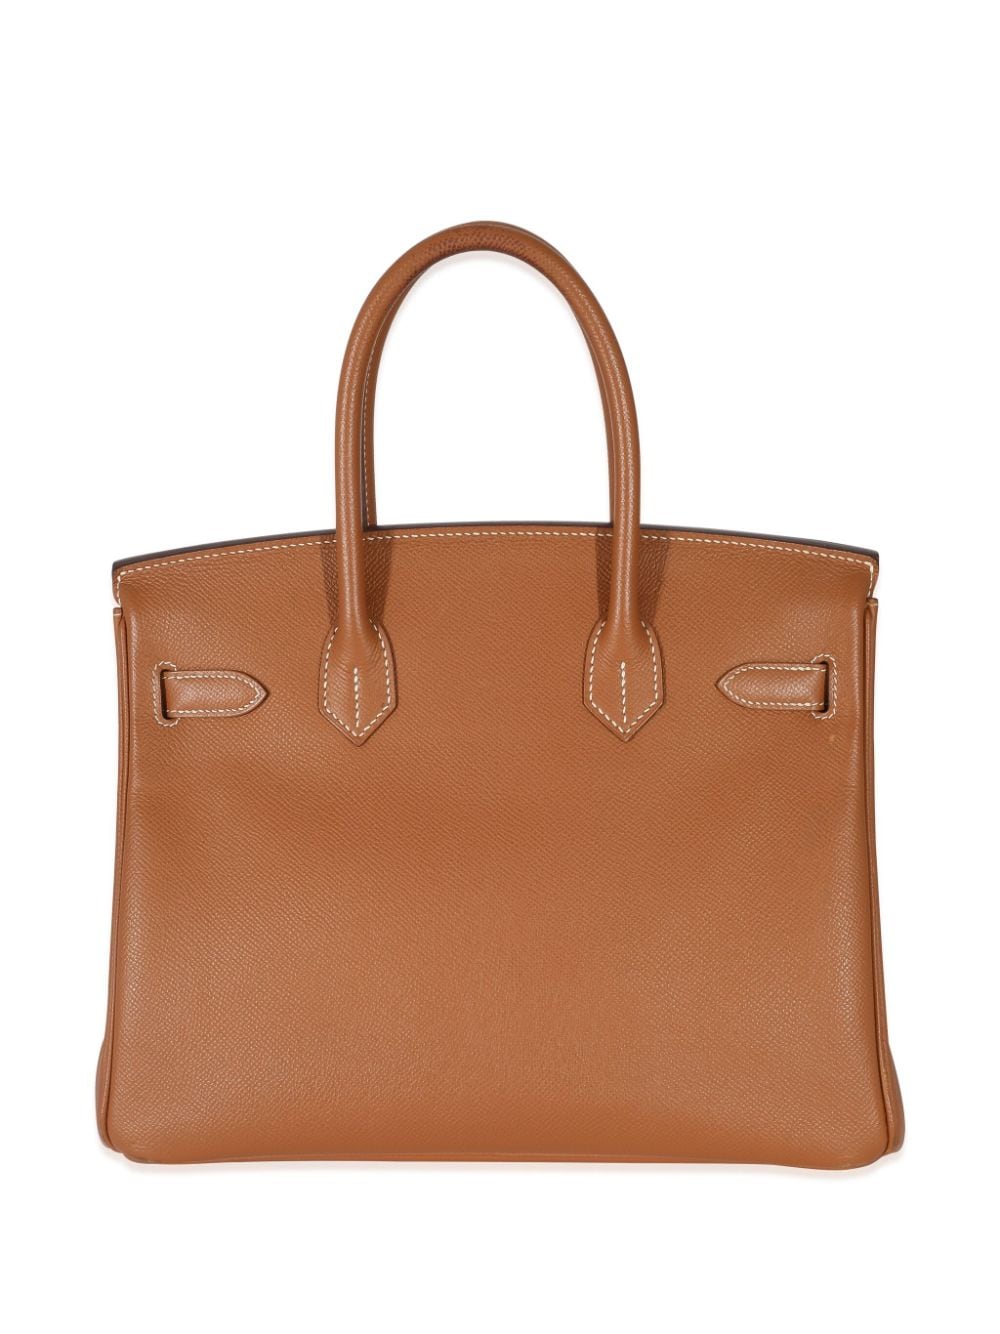 Hermès 2018 pre-owned Birkin 30 handbag - Bruin